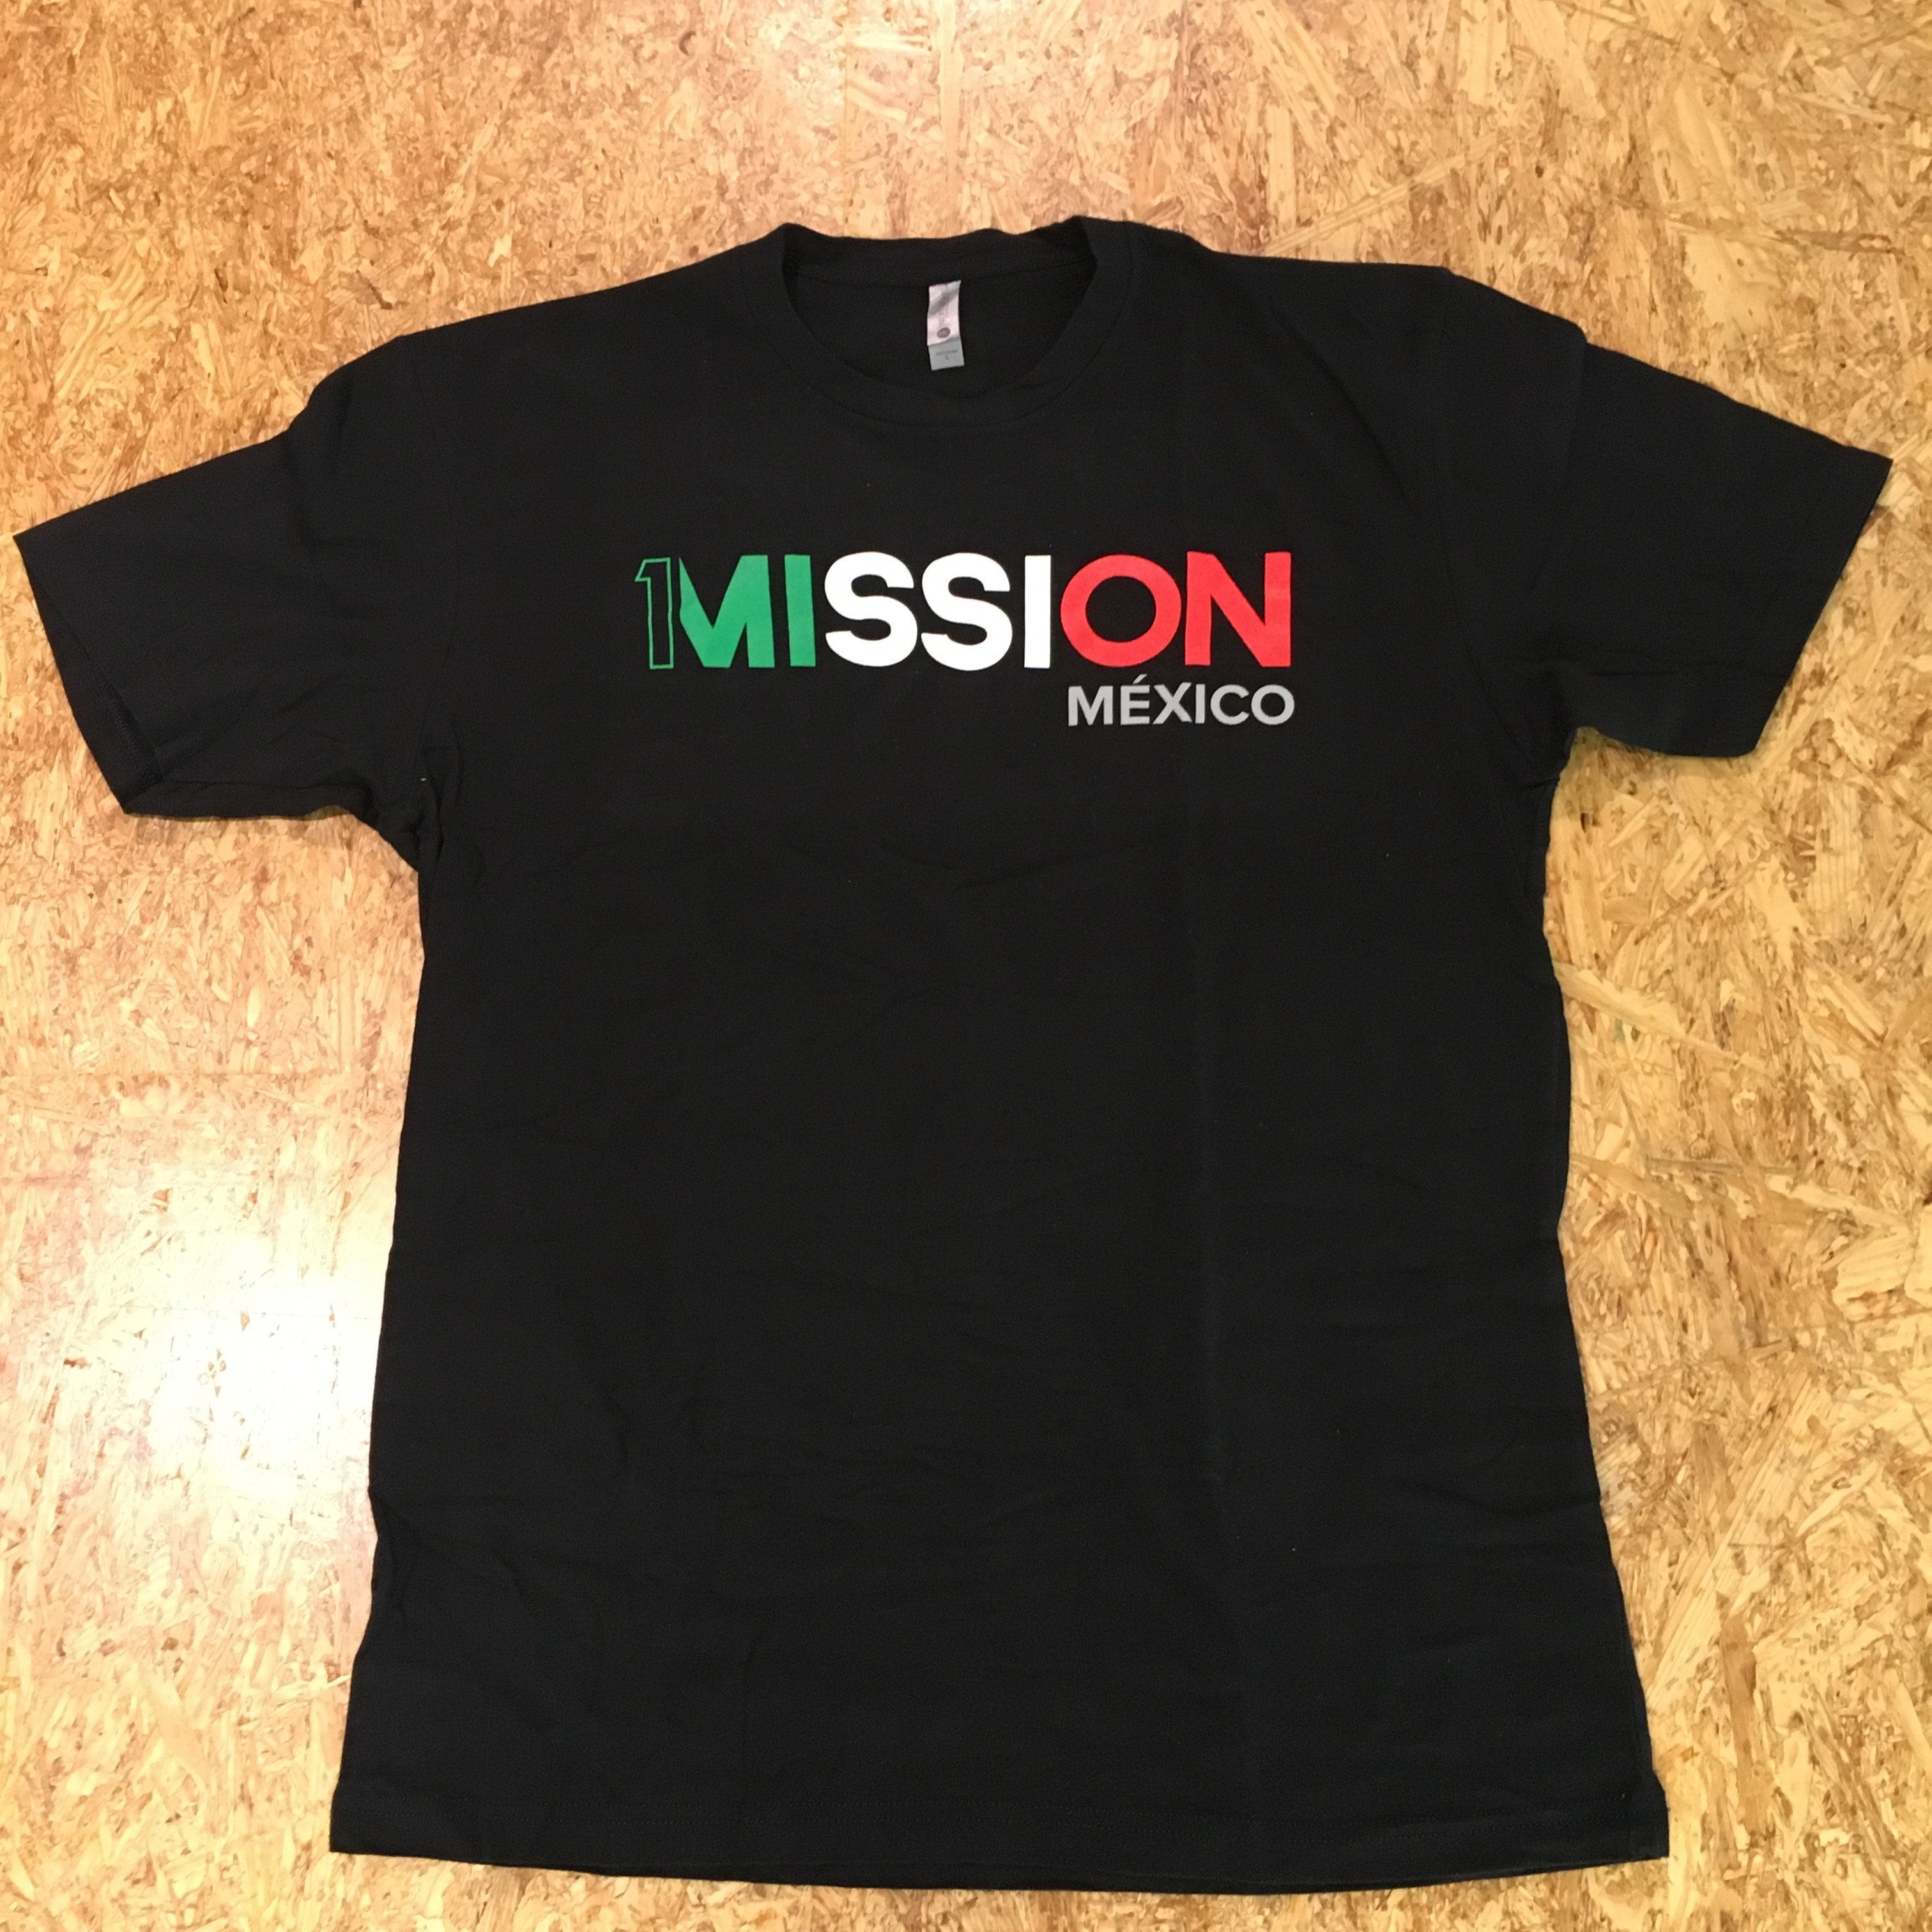 1MISSION Mexico Shirt